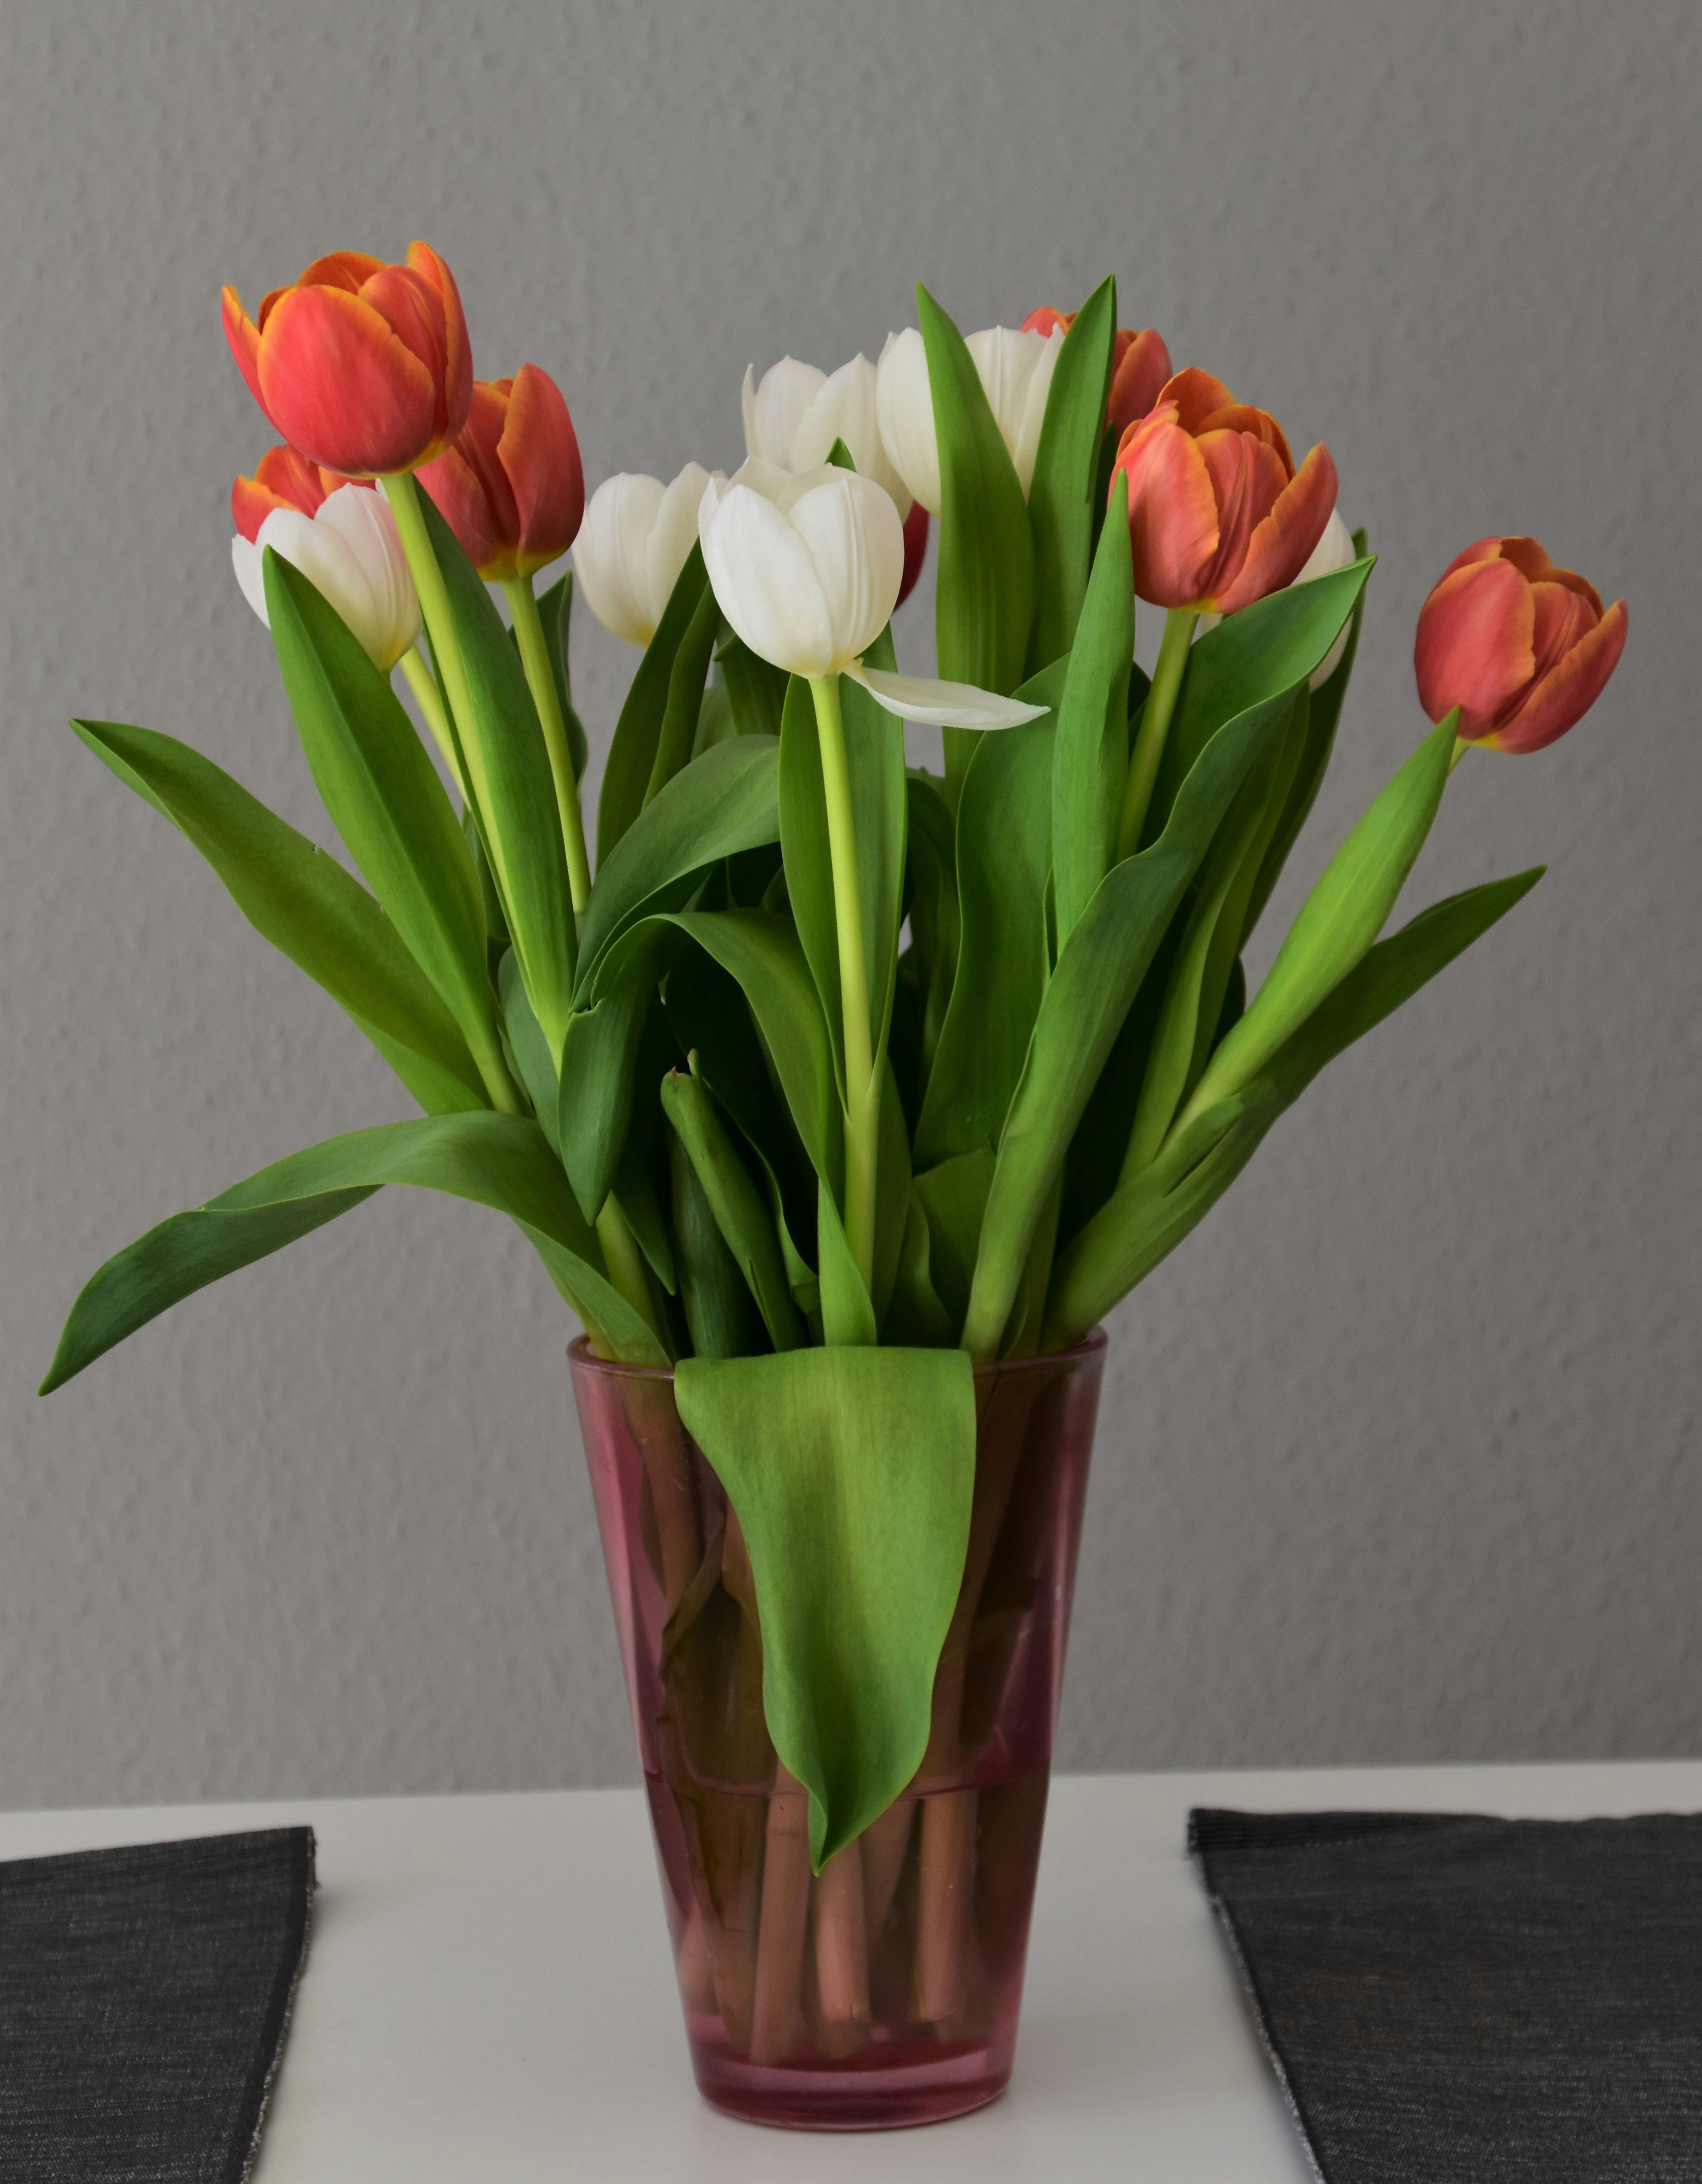 bouquet-tulipes-waldemar-unsplash.jpg